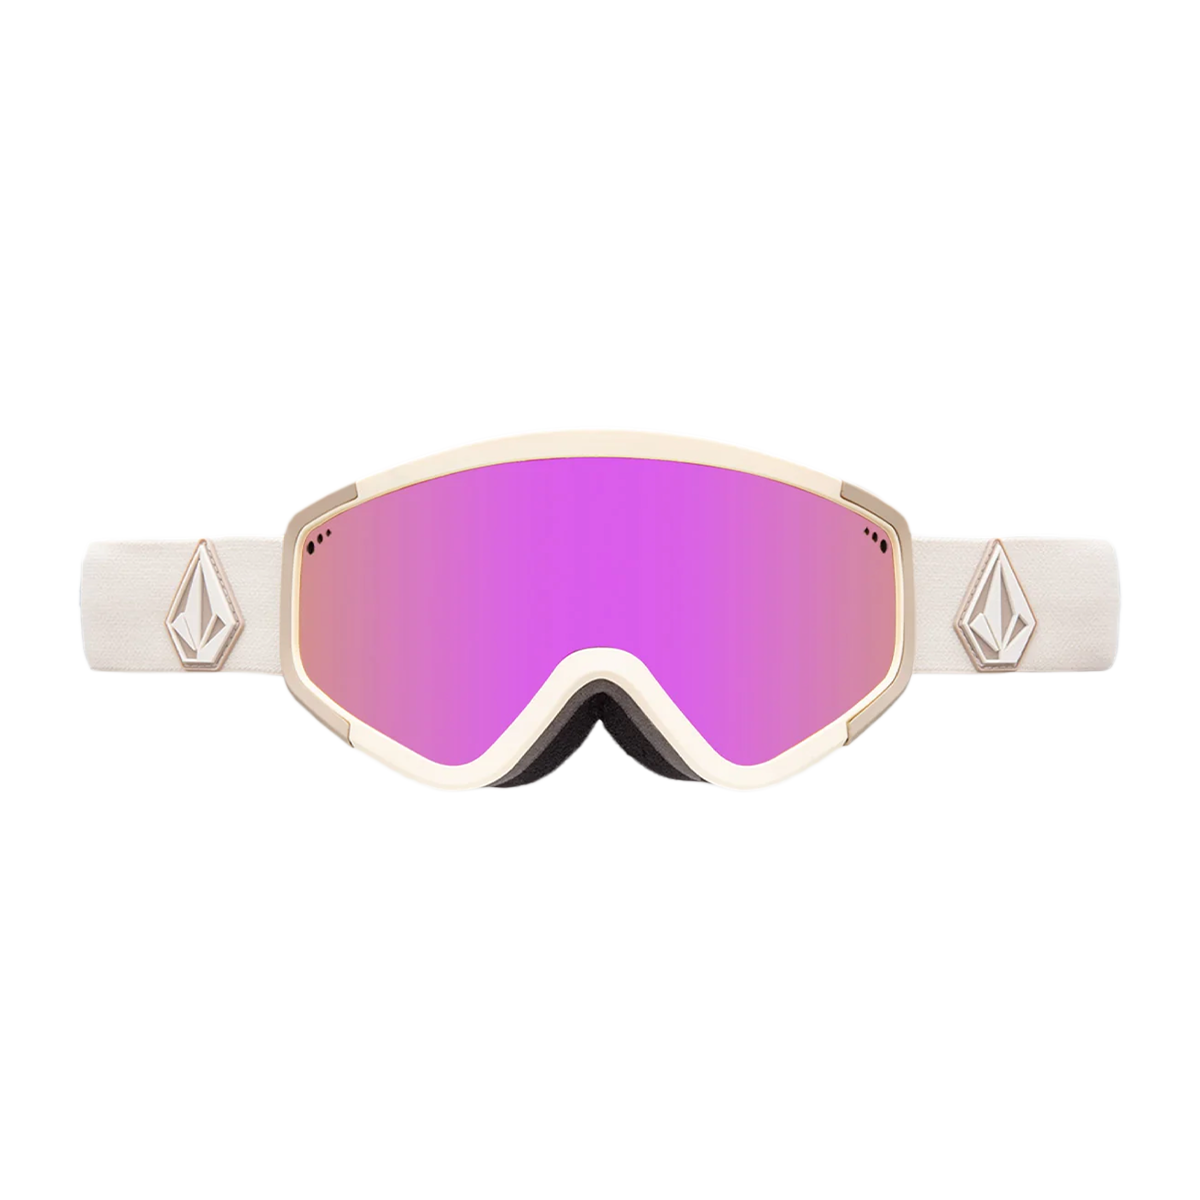 Volcom Attunga Goggles + Bonus Lens - Khakiest Sand/Pink Chrome